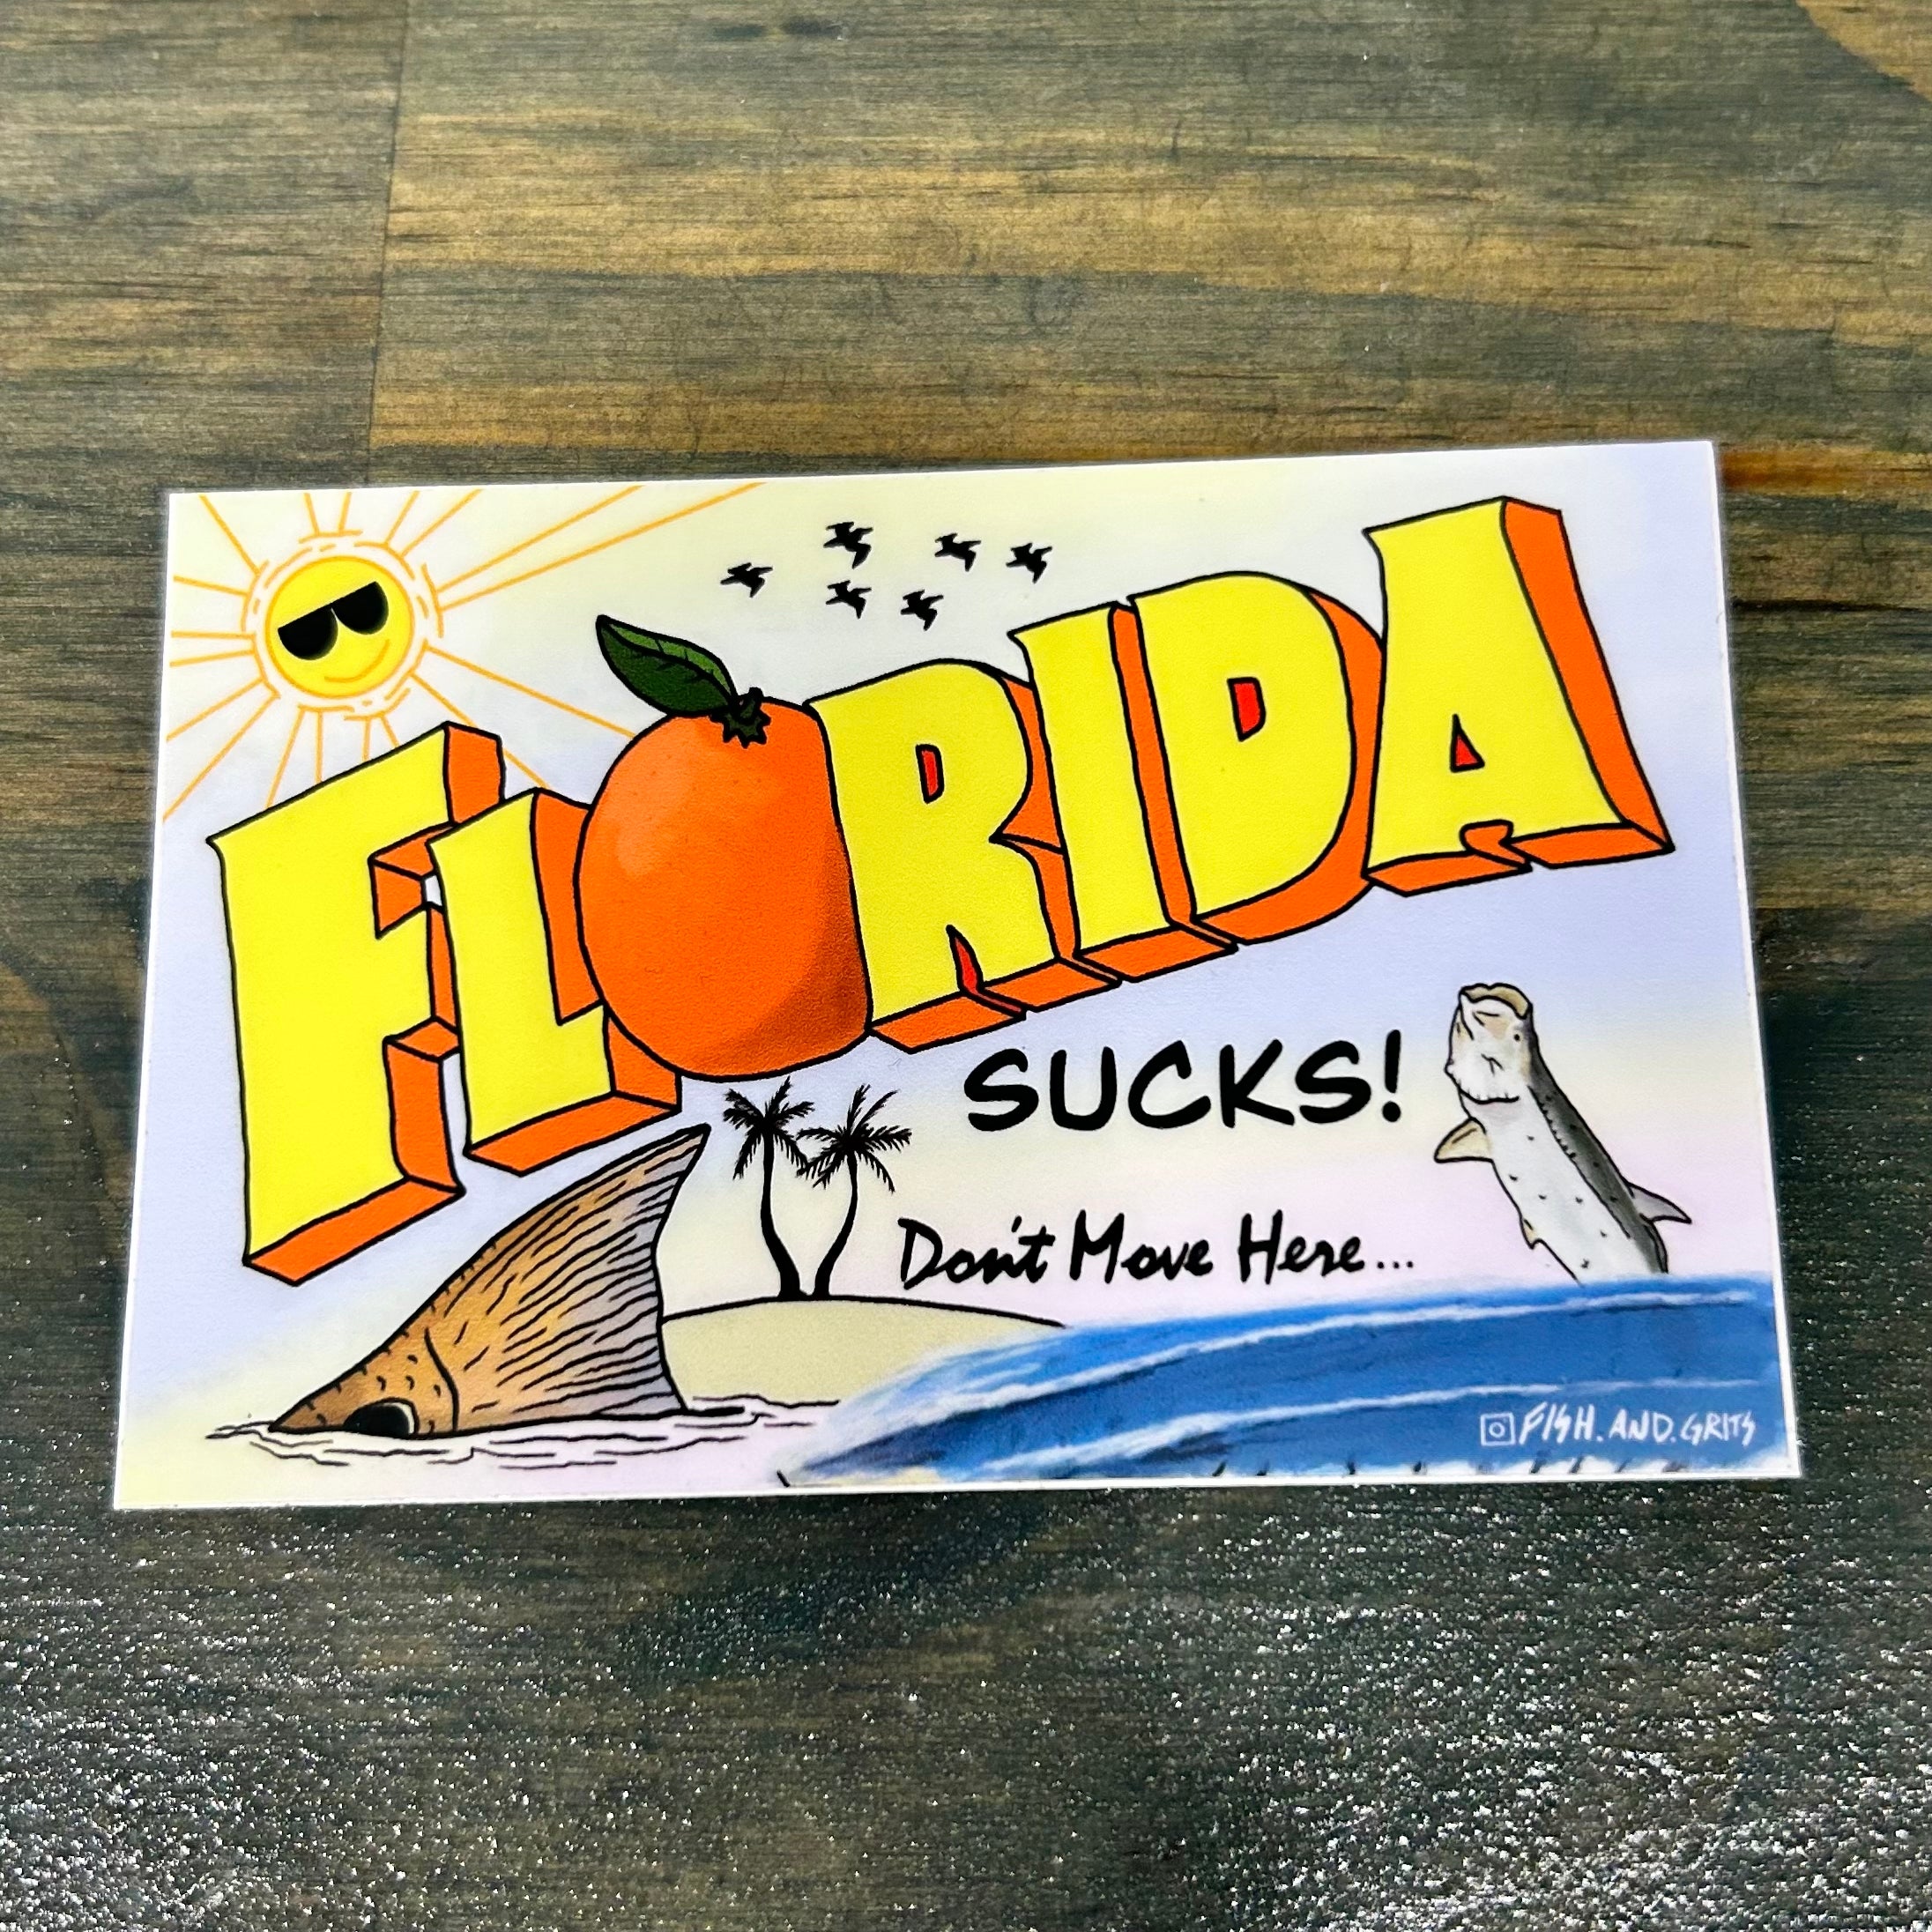 Fish and Grits “Florida sucks” sticker